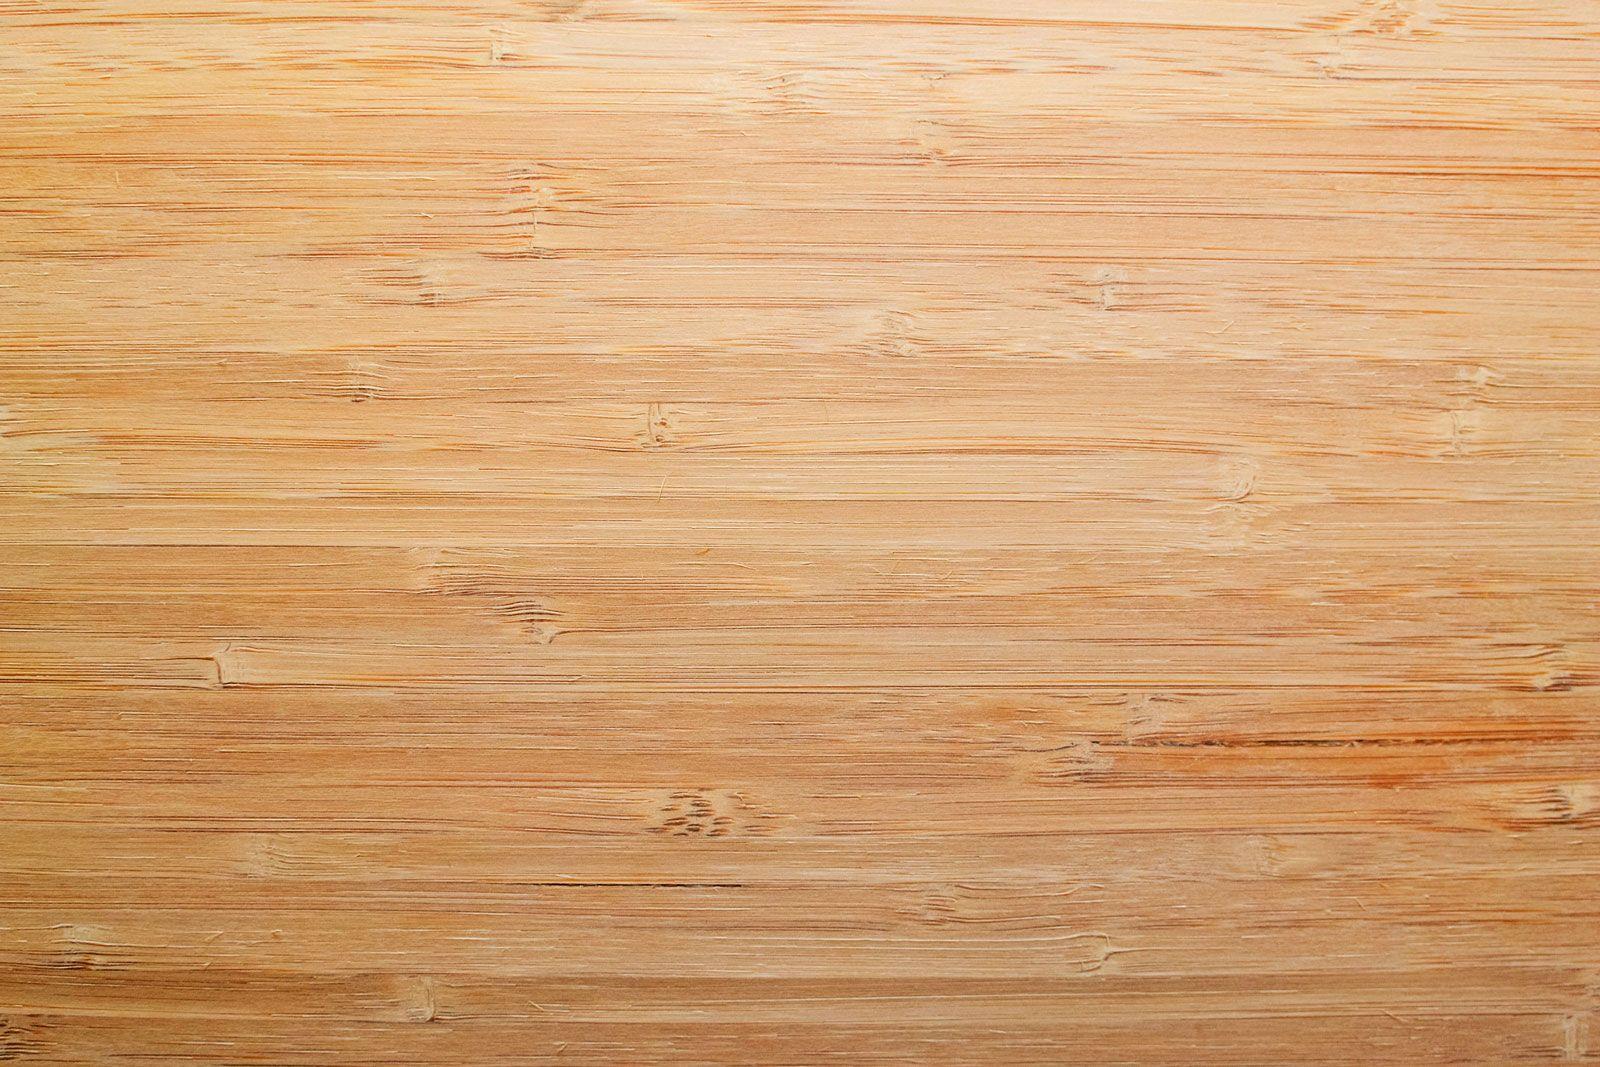 Wood Flooring Texture Seamless And Oak Wood Flooring Texture